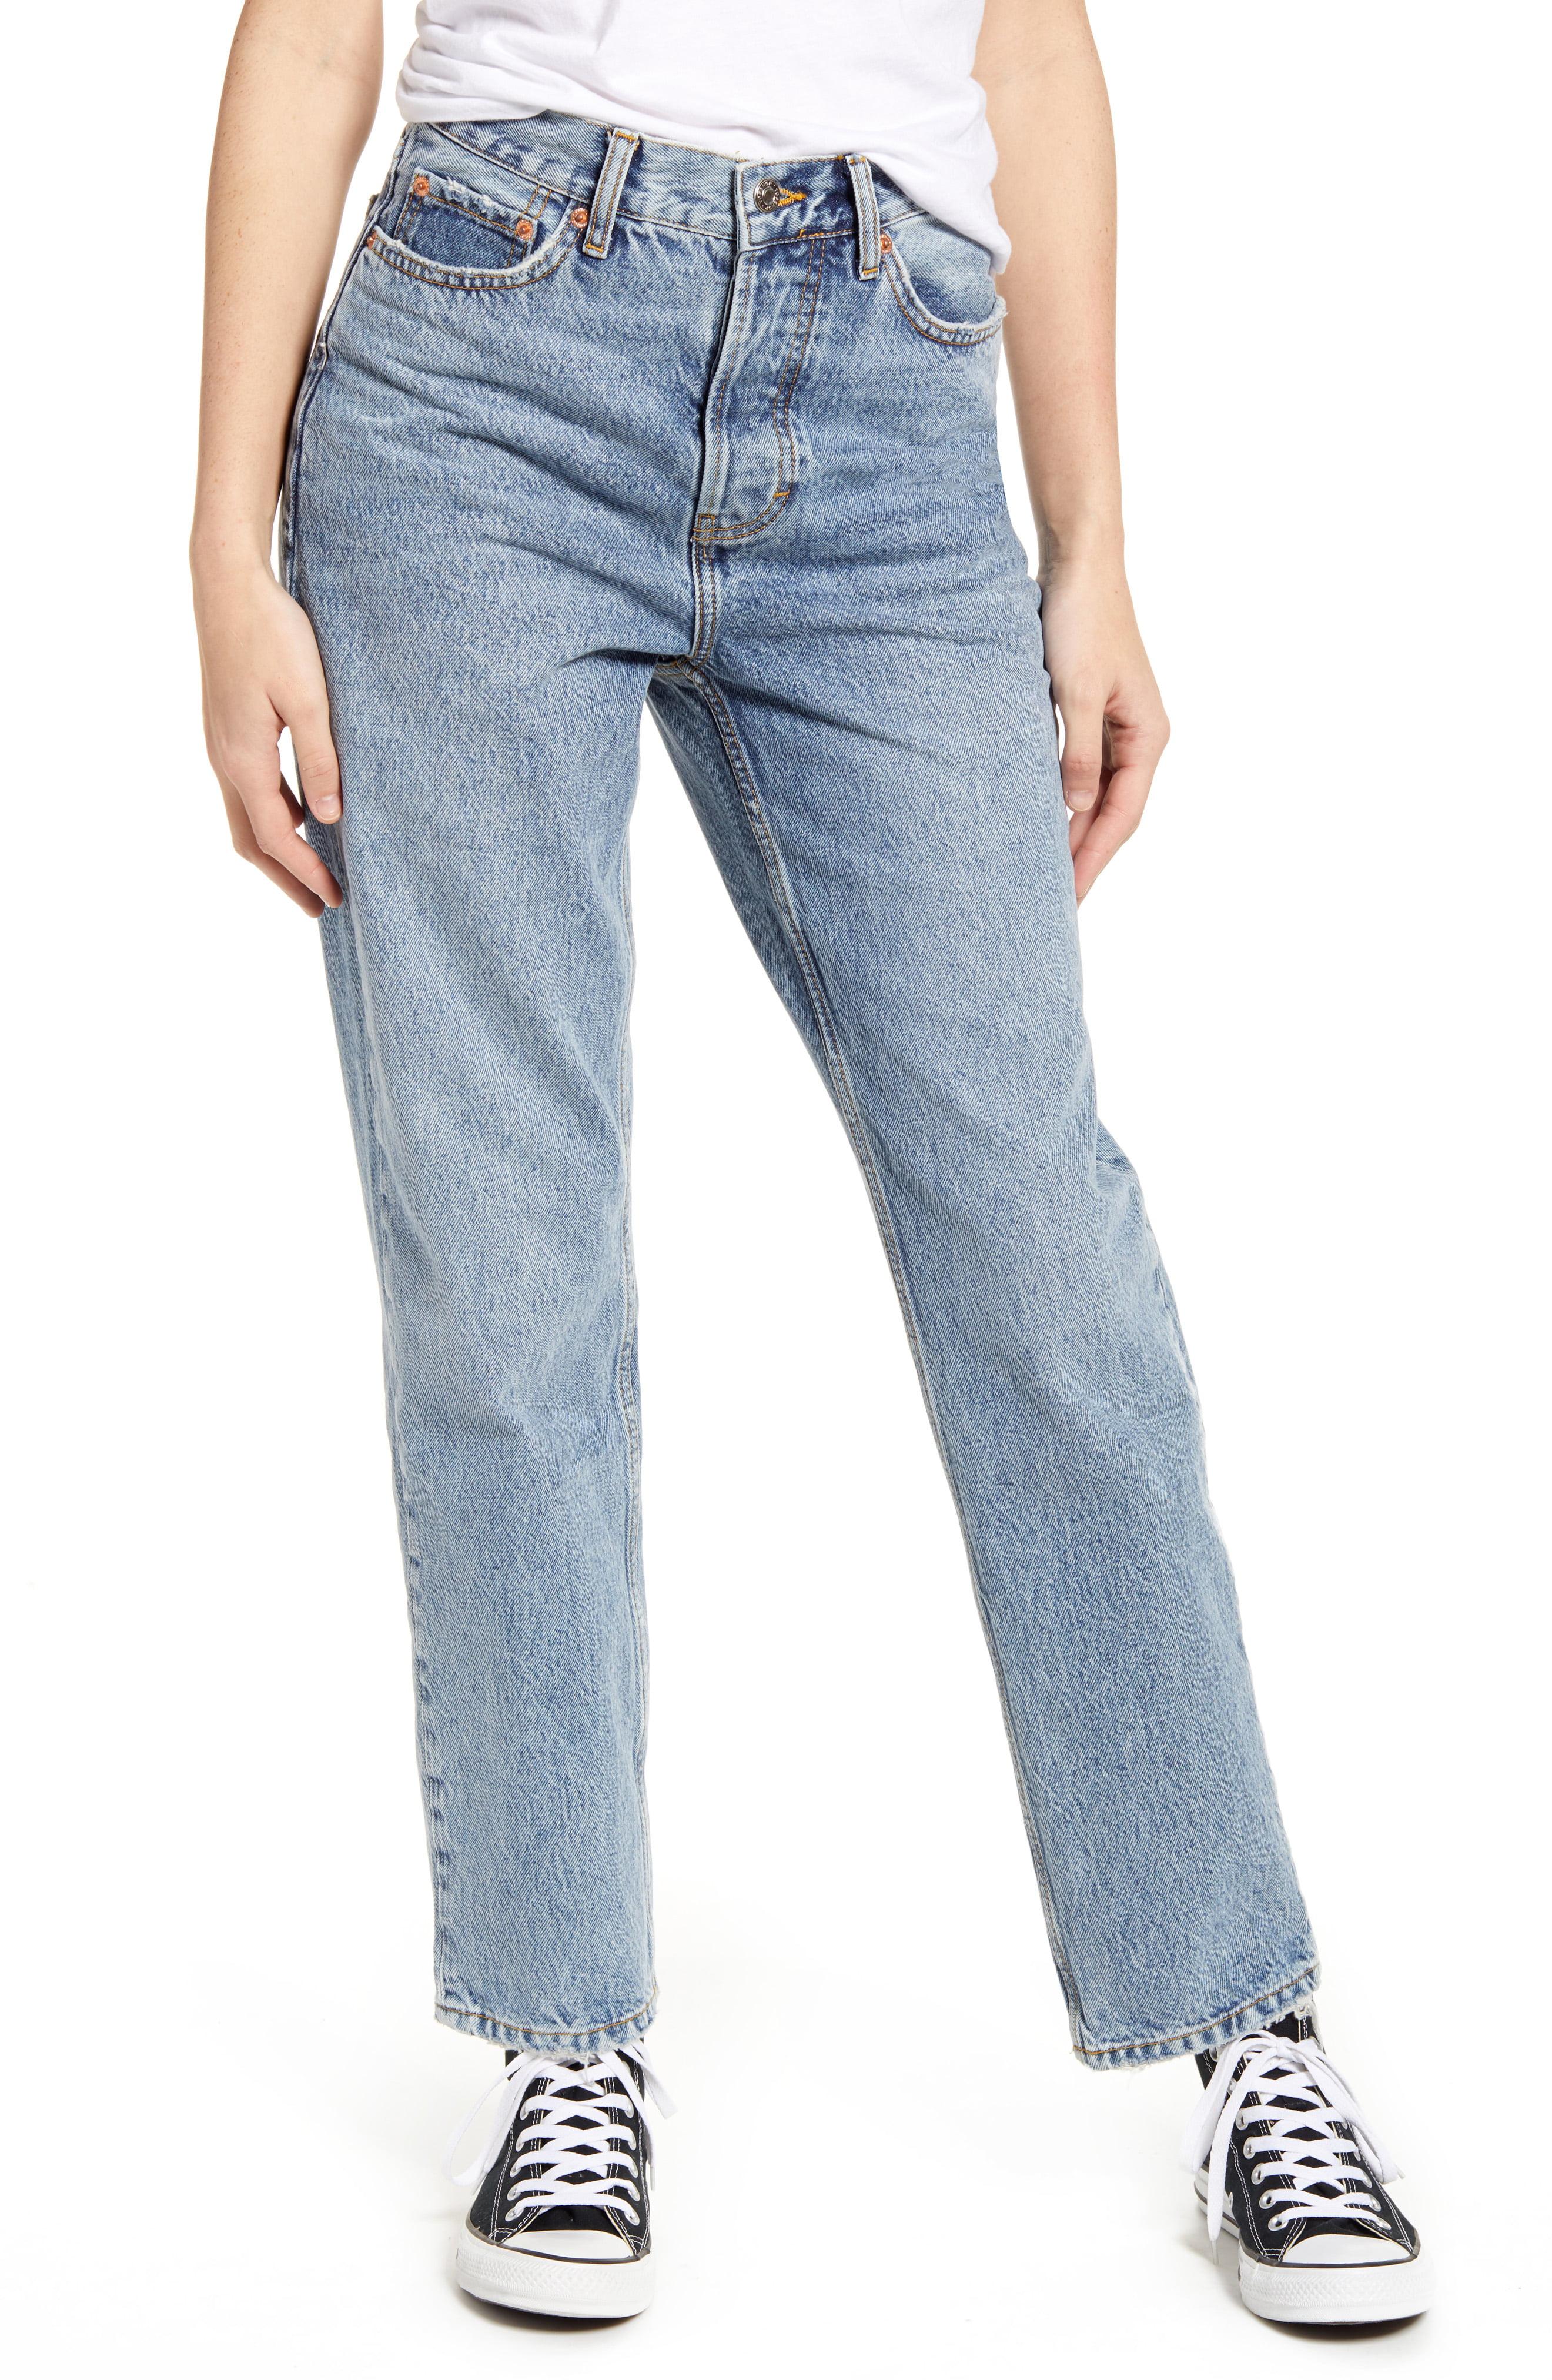 TOPSHOP Denim Phat Dad Jeans in Mid Denim (Blue) - Lyst